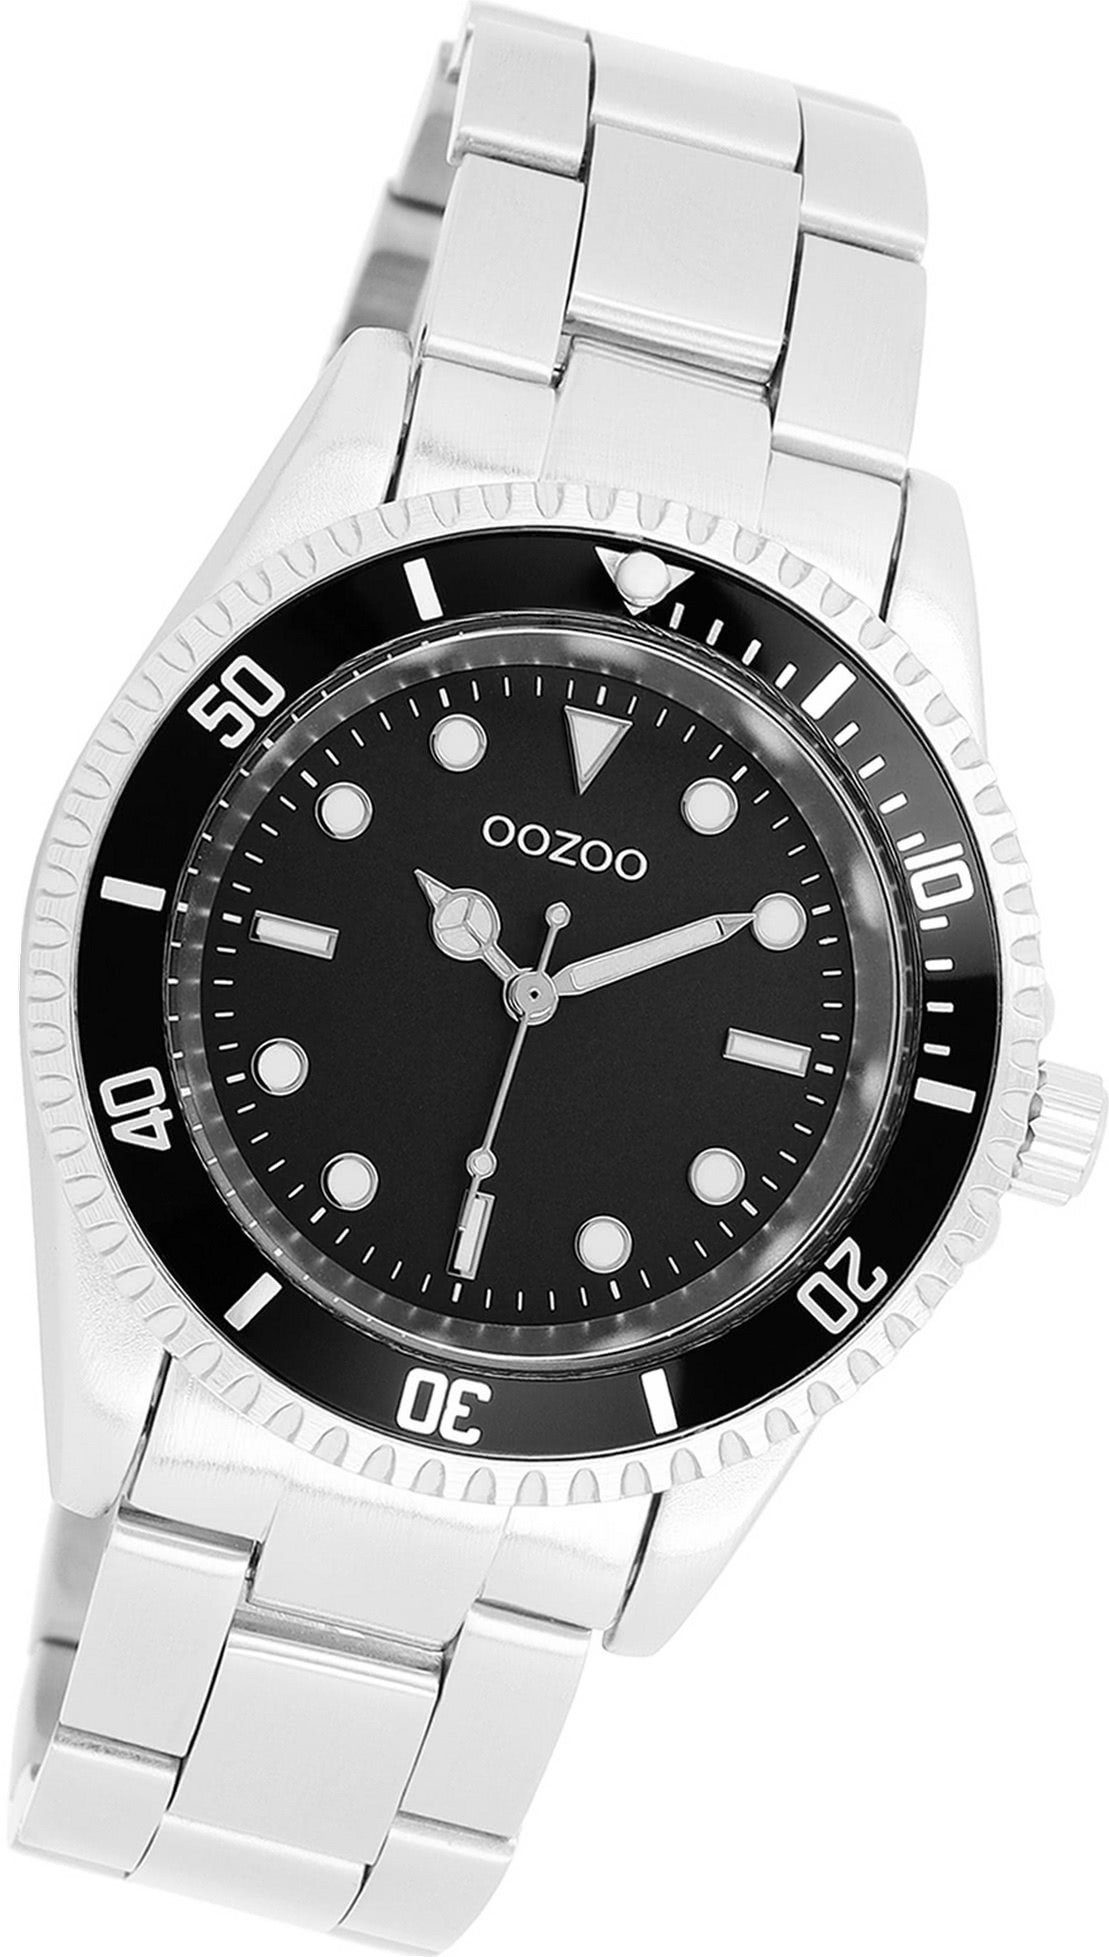 Damenuhr Damen (ca. Oozoo Timepieces, mittel Quarzuhr silber, rundes Gehäuse, Edelstahlarmband 36mm) OOZOO Armbanduhr